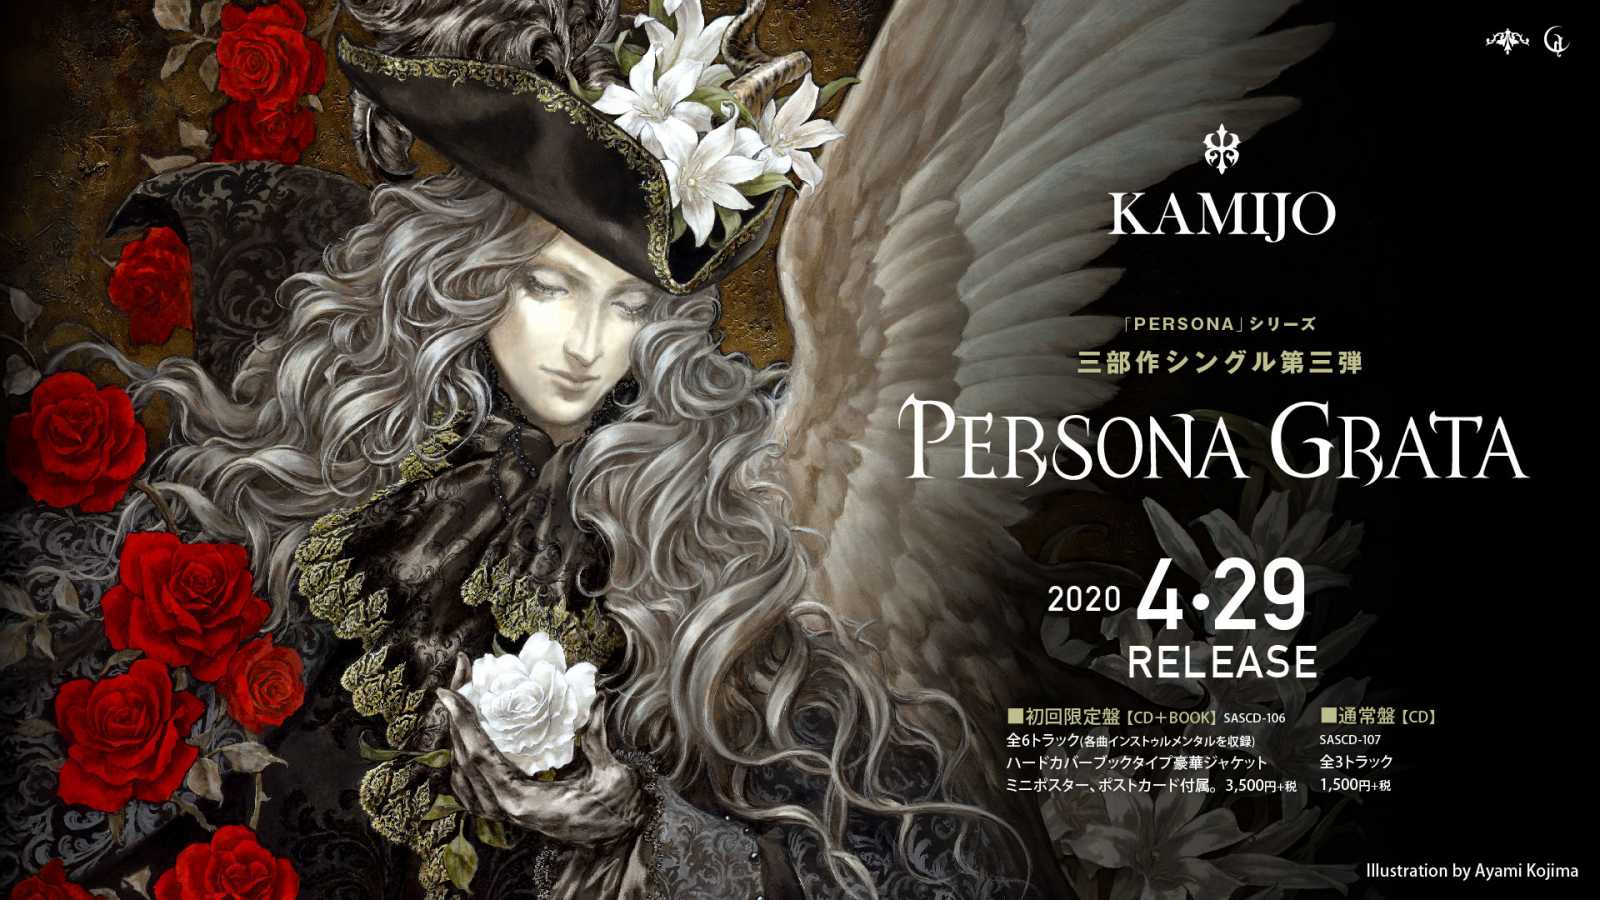 Nuevo single de KAMIJO © CHATEAU AGENCY CO., Ltd. All rights reserved.